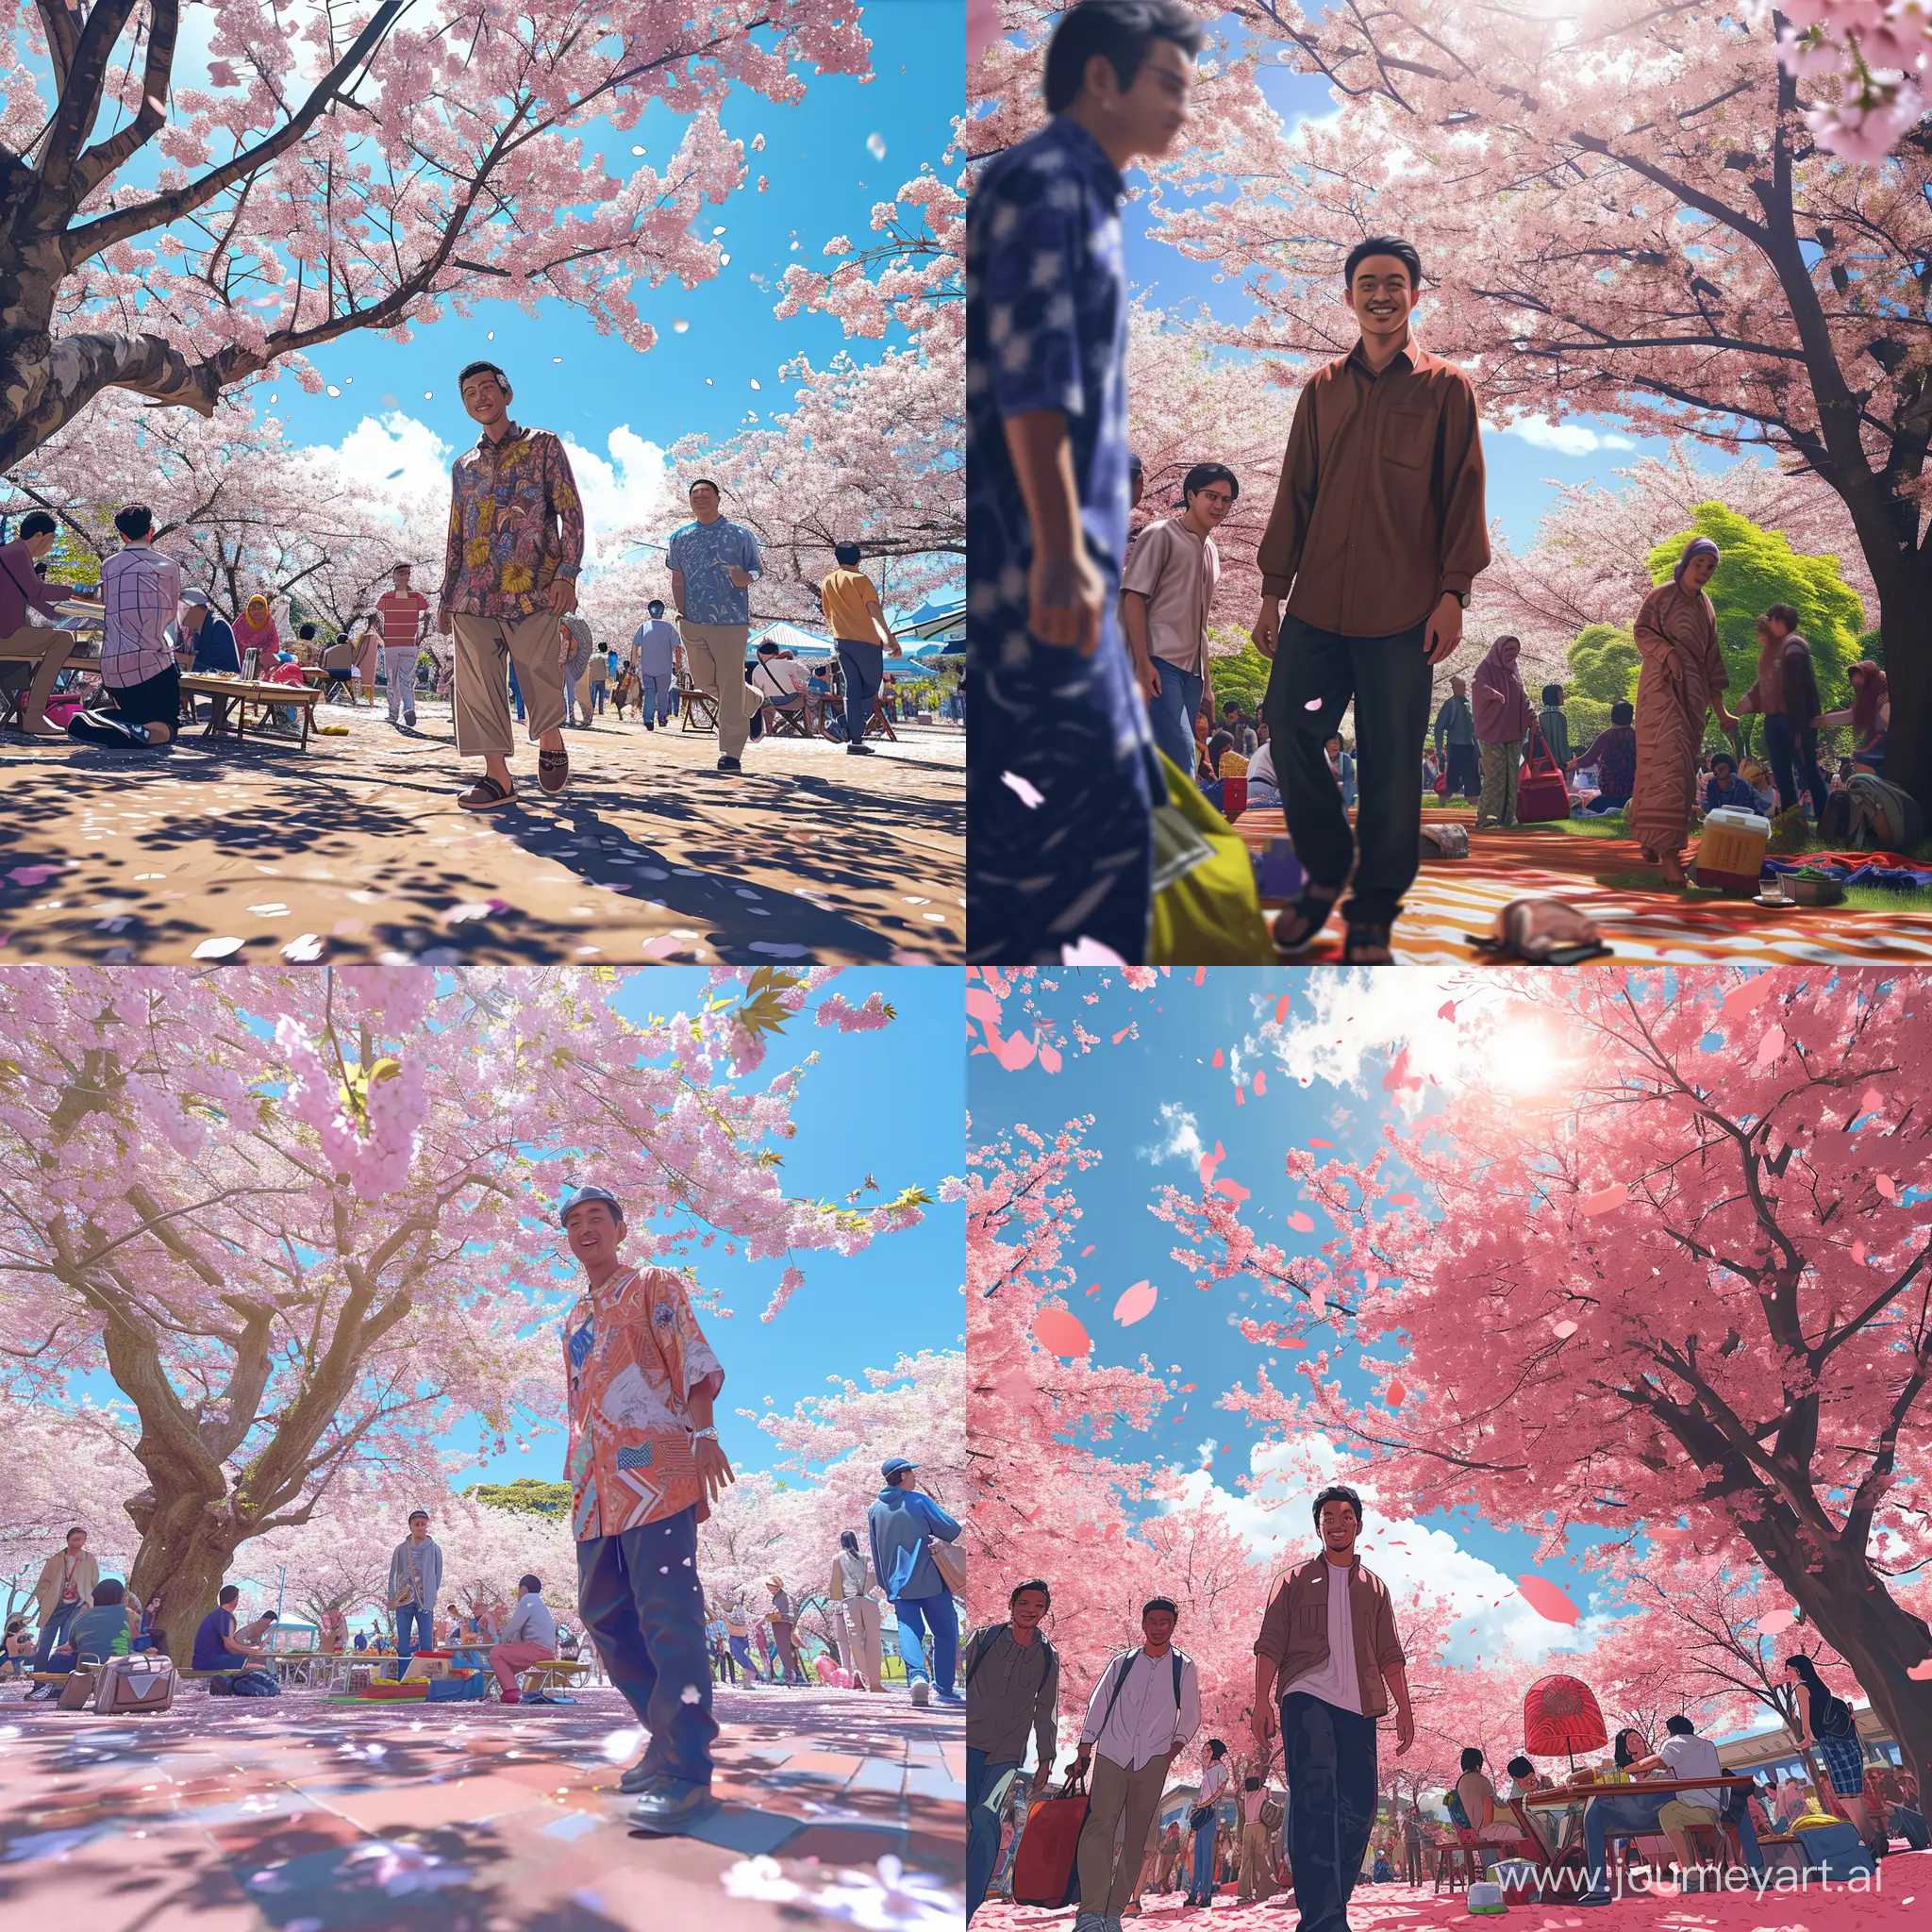 Malay-Man-in-Baju-Melayu-Enjoying-Hanami-Picnic-under-Cherry-Blossoms